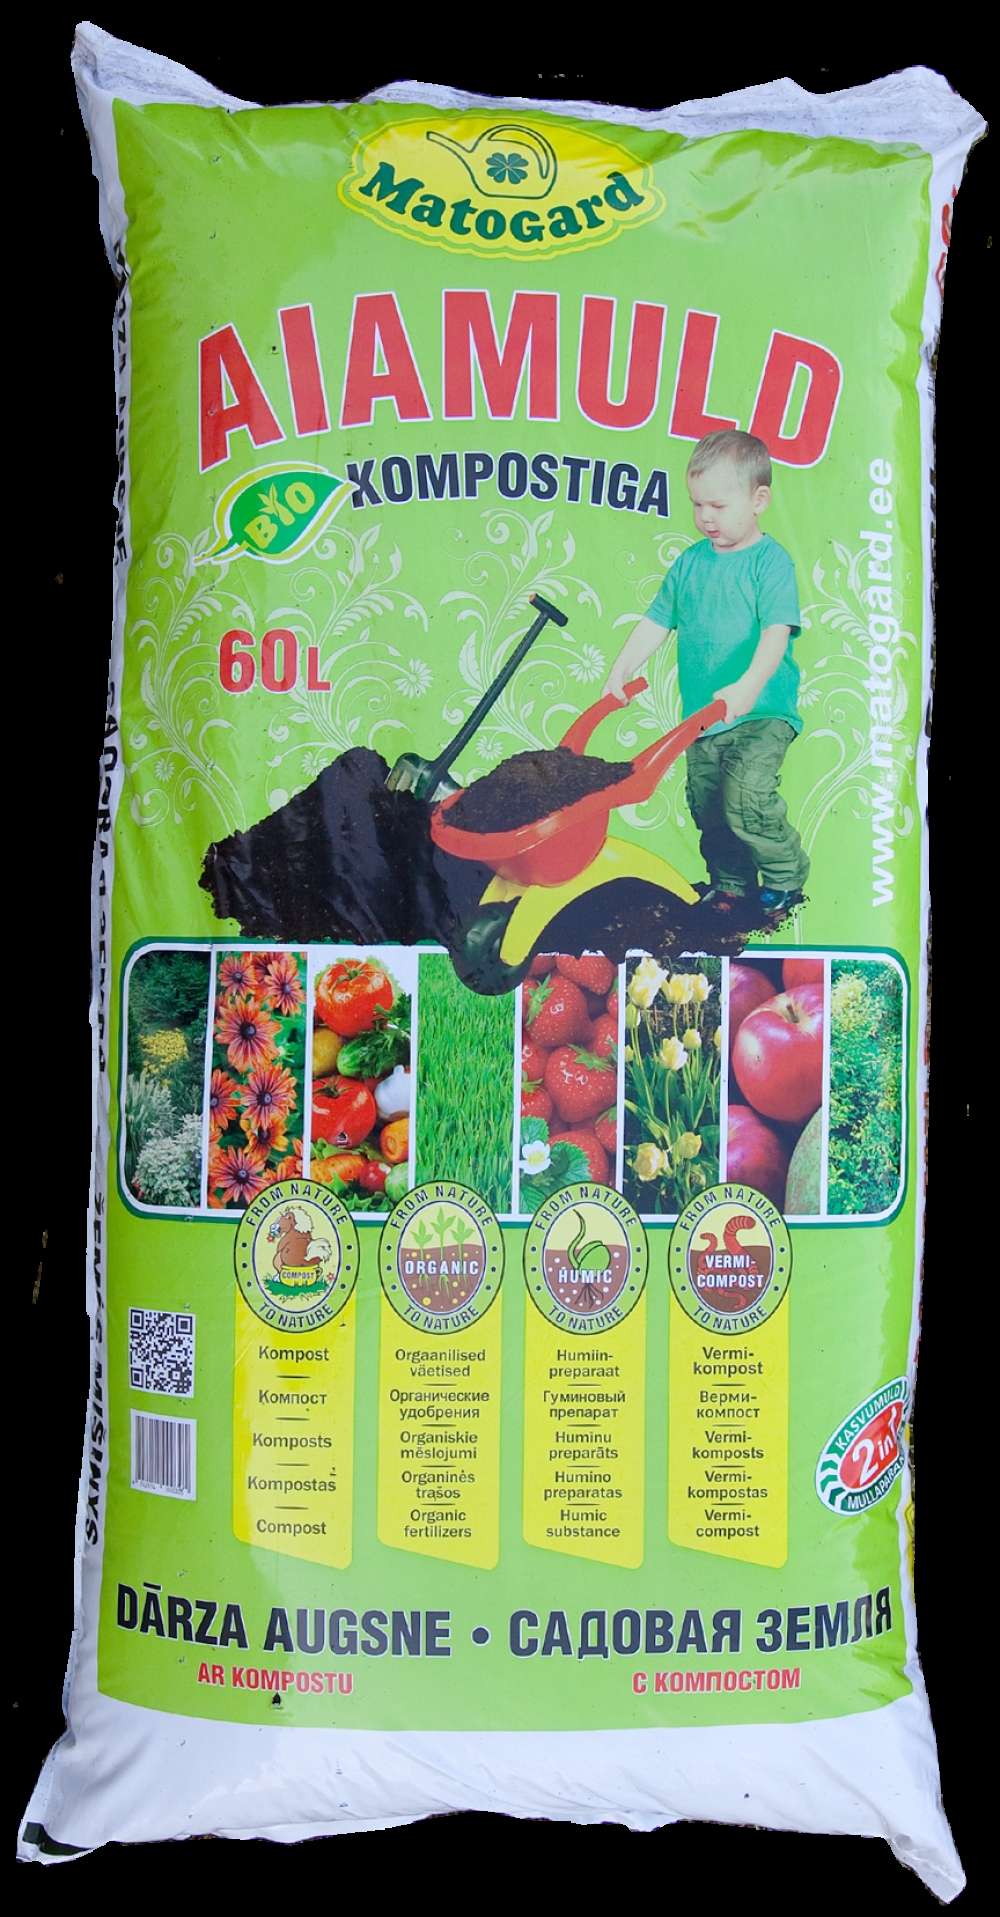 Matogard aiamuld kompostiga 60L